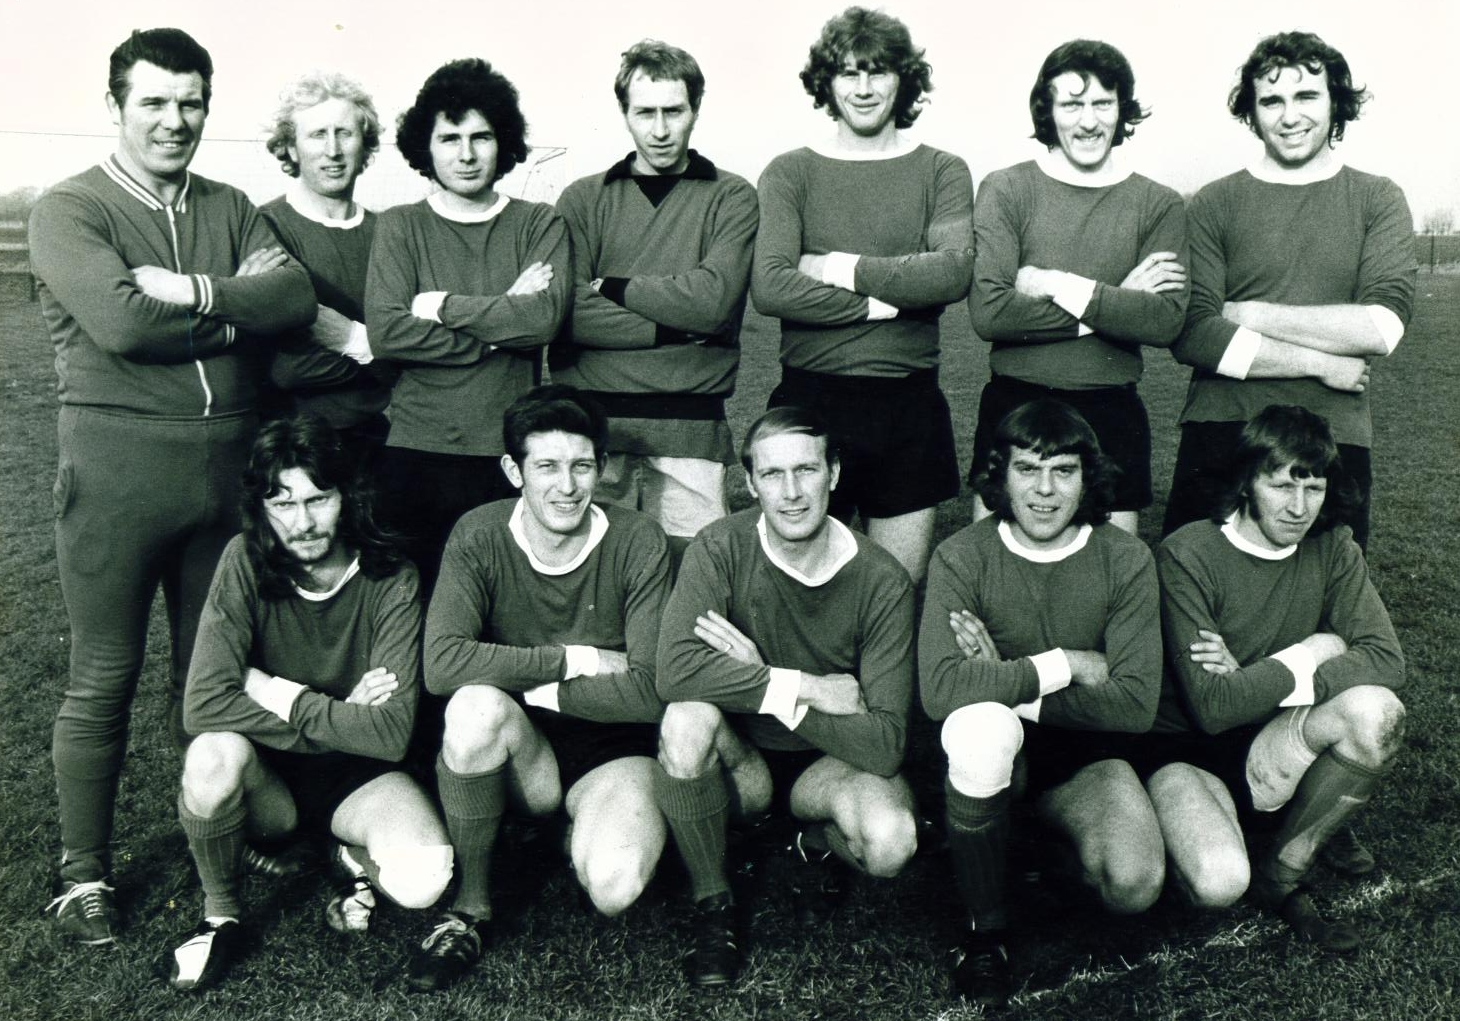 1975 team